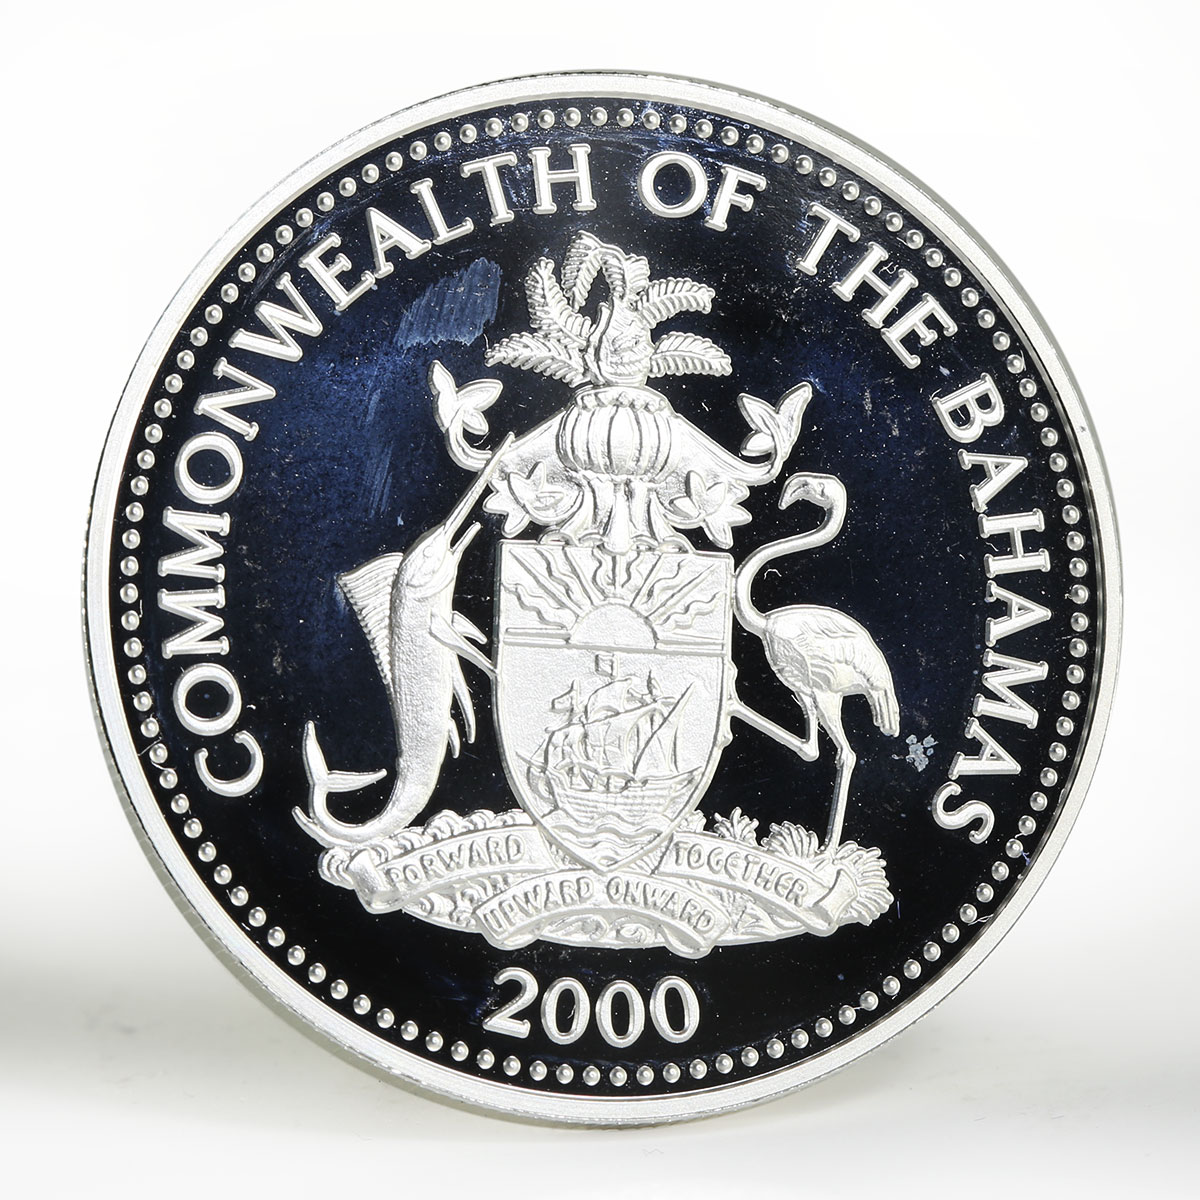 Bahamas 10 dollars Olympic Games Sydney Golden Girls silver coin 2000